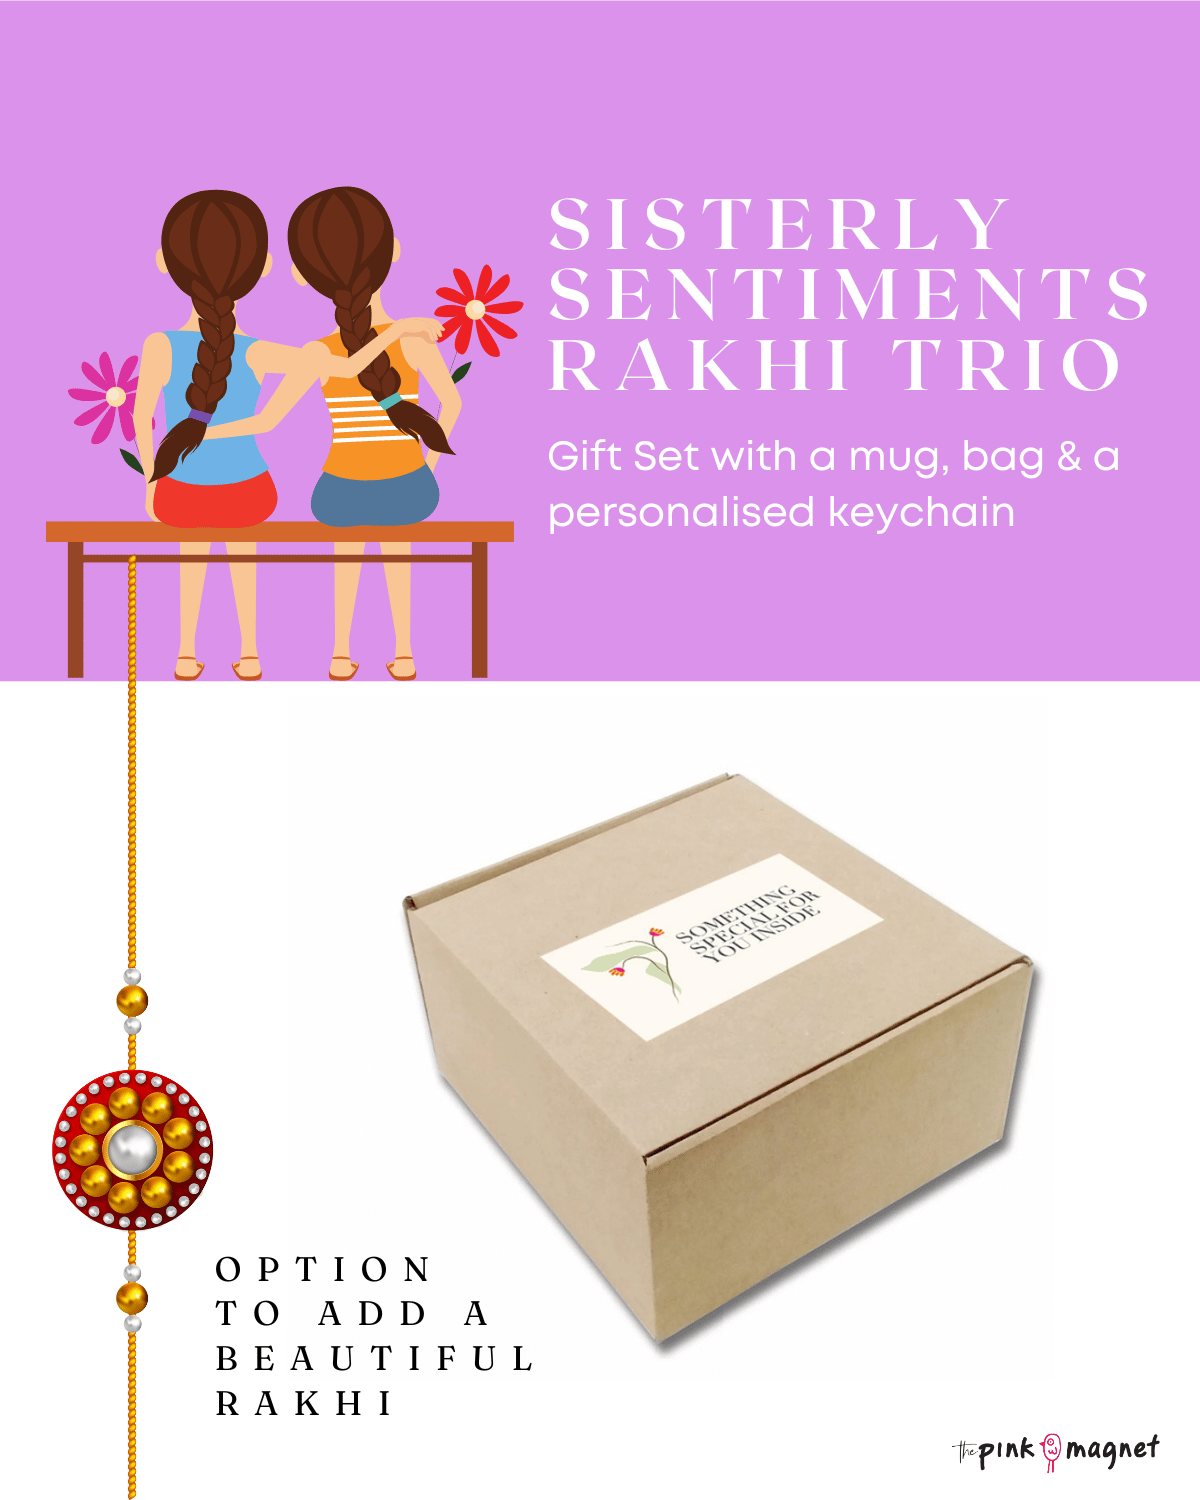 Sisterly Sentiments Rakhi Trio Gift Hamper